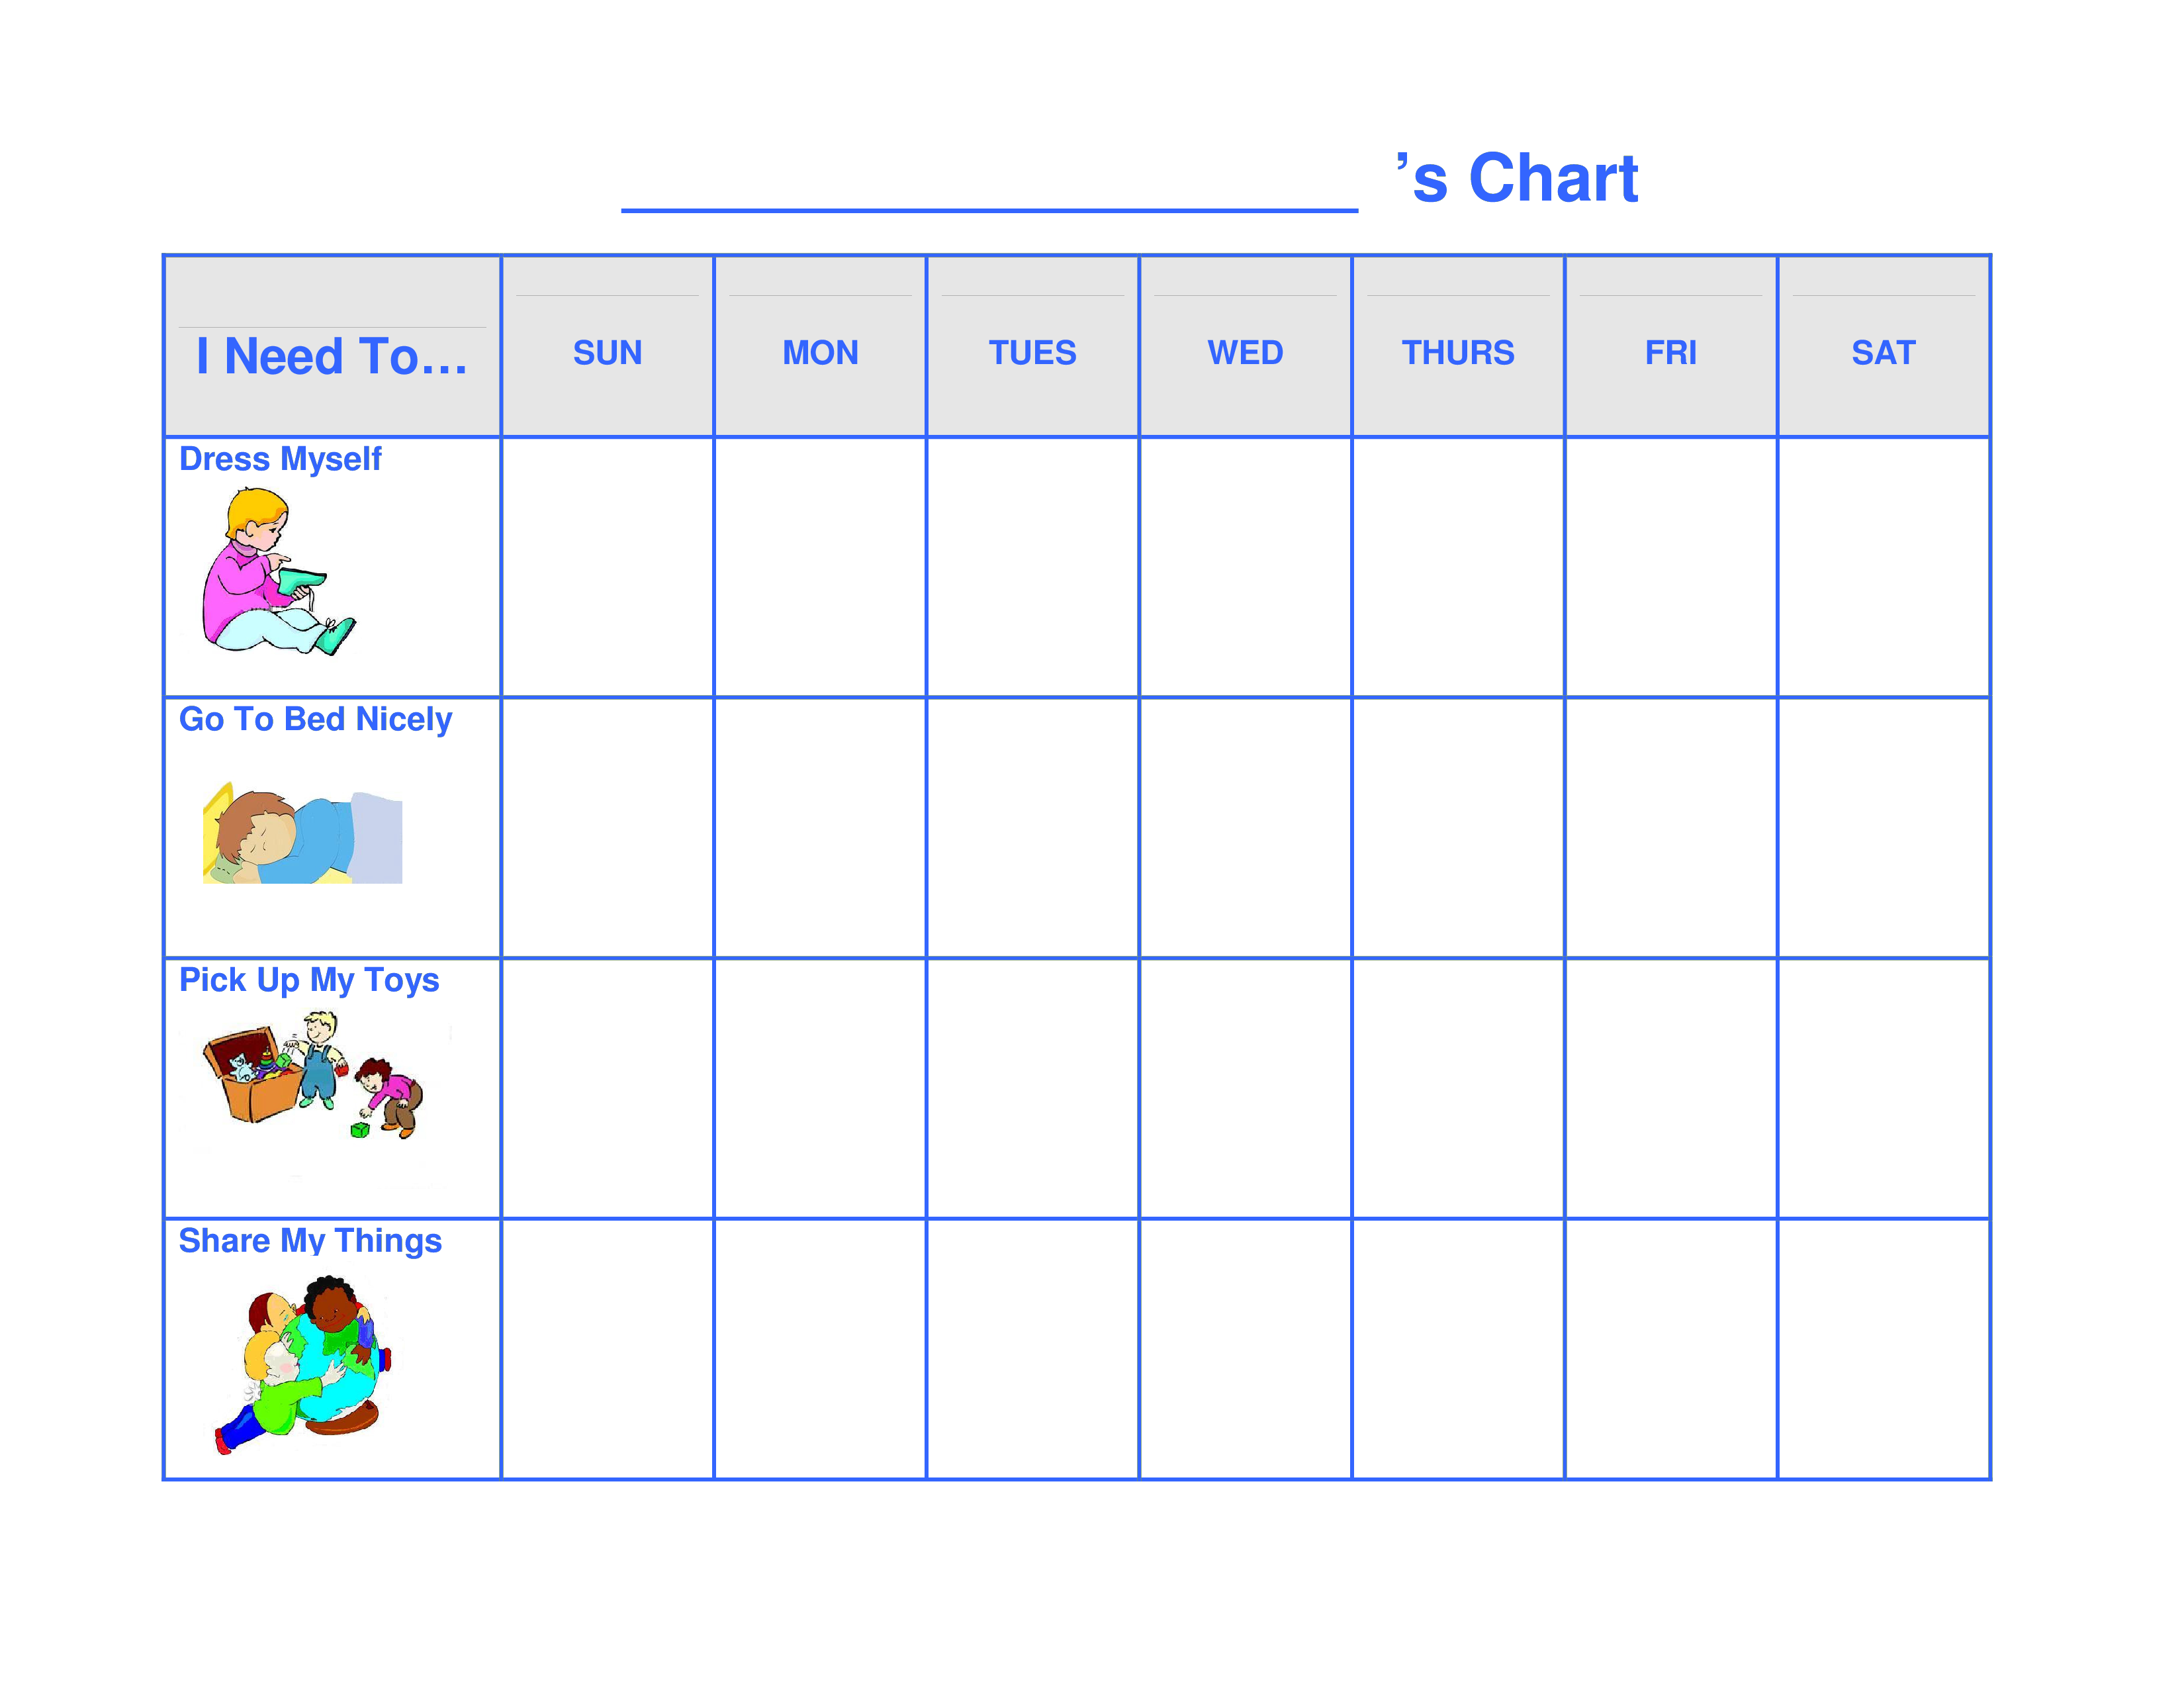 Printable Behavior Chart Template